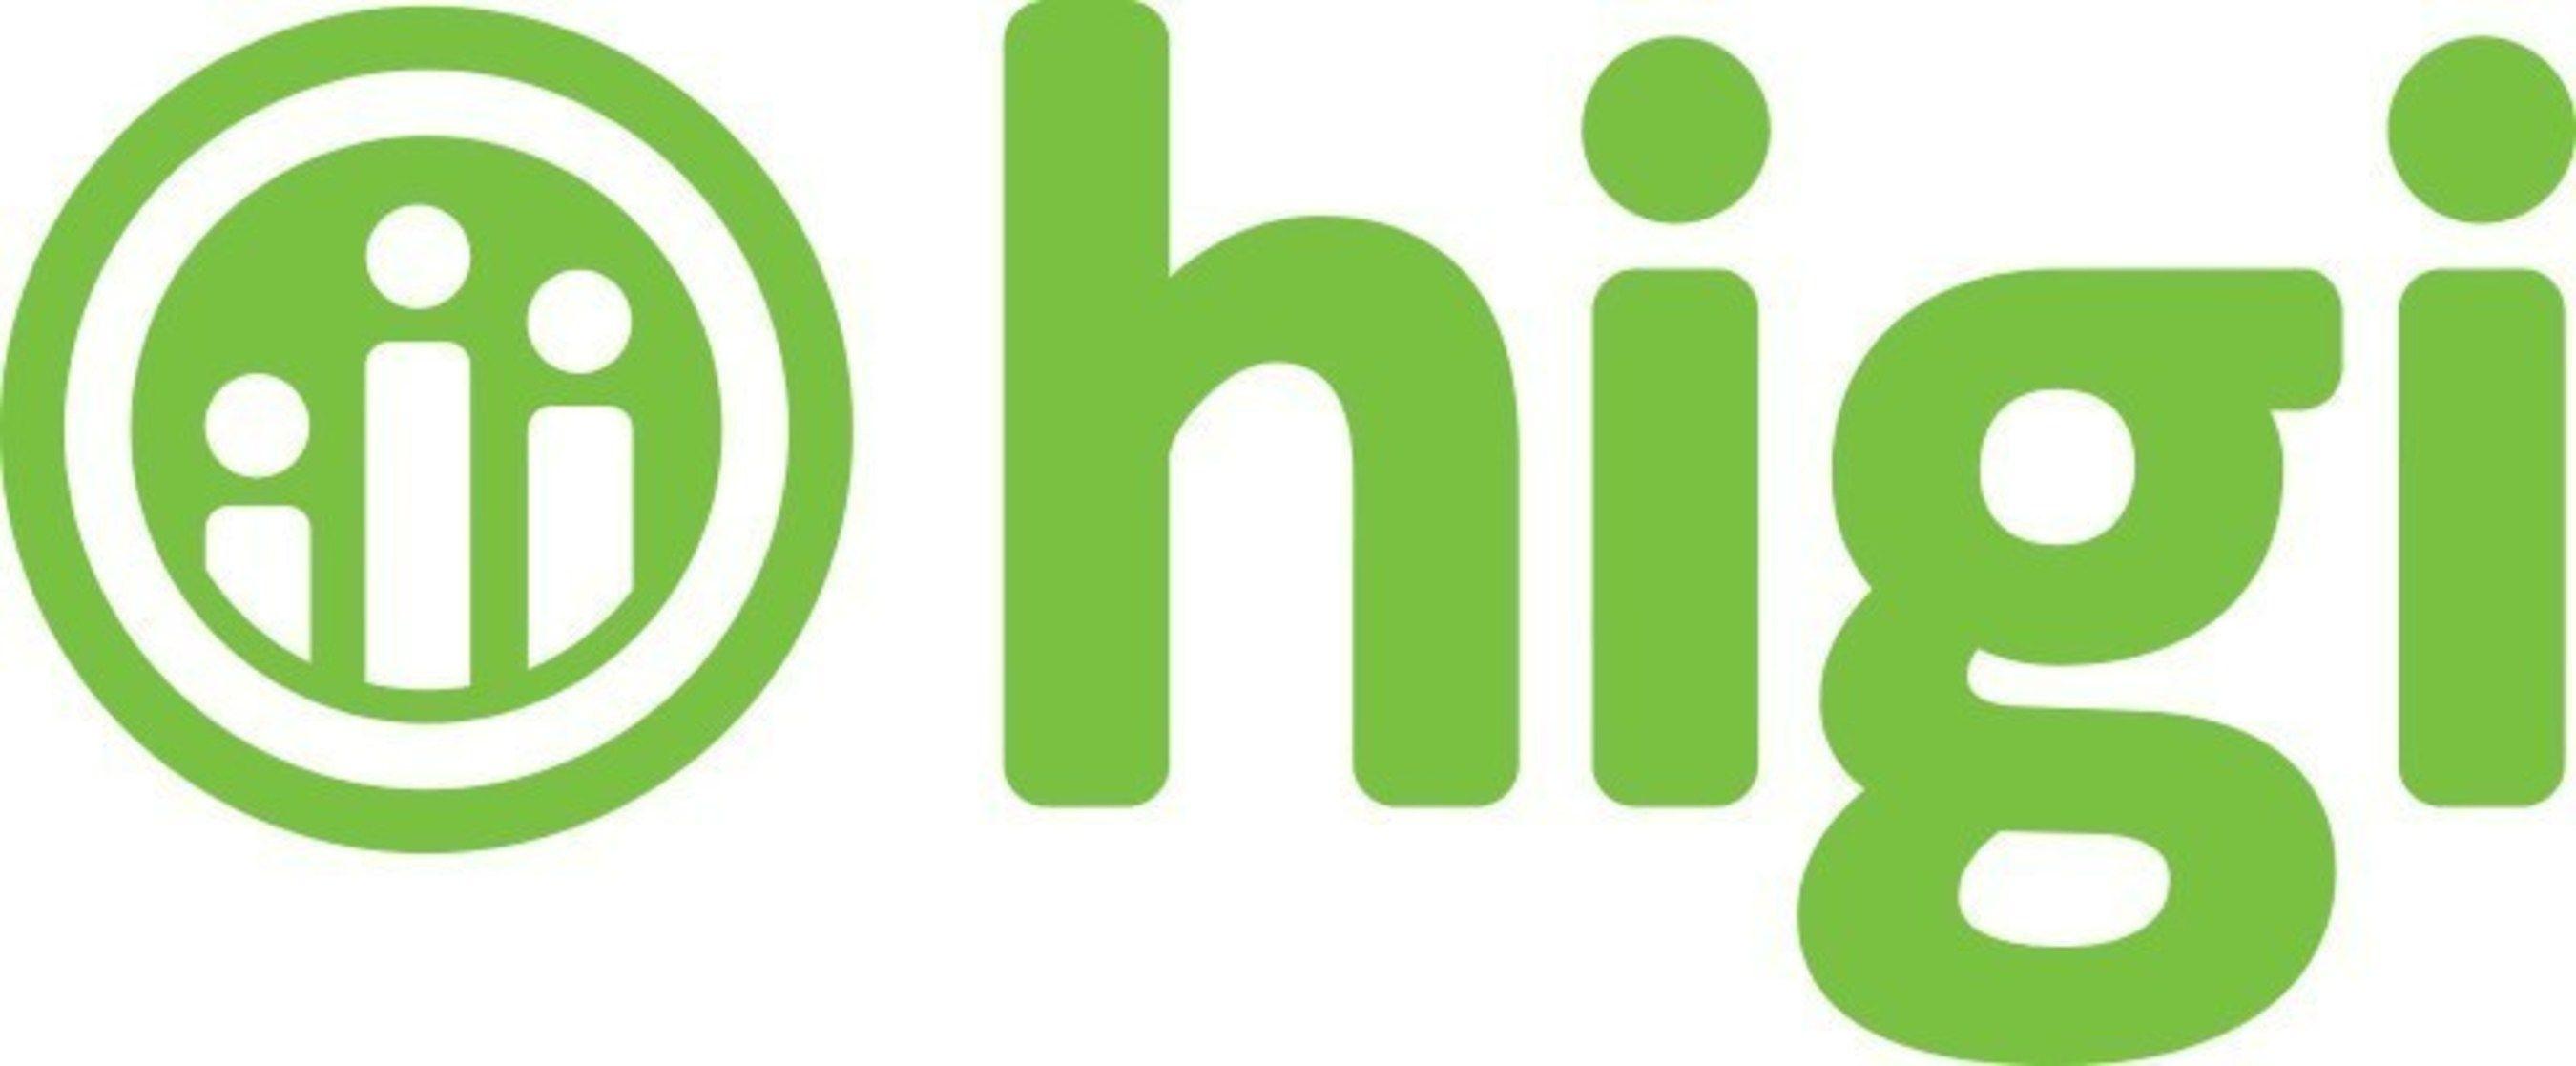 Shopko Logo - higi Announces New Partnership with Shopko Stores